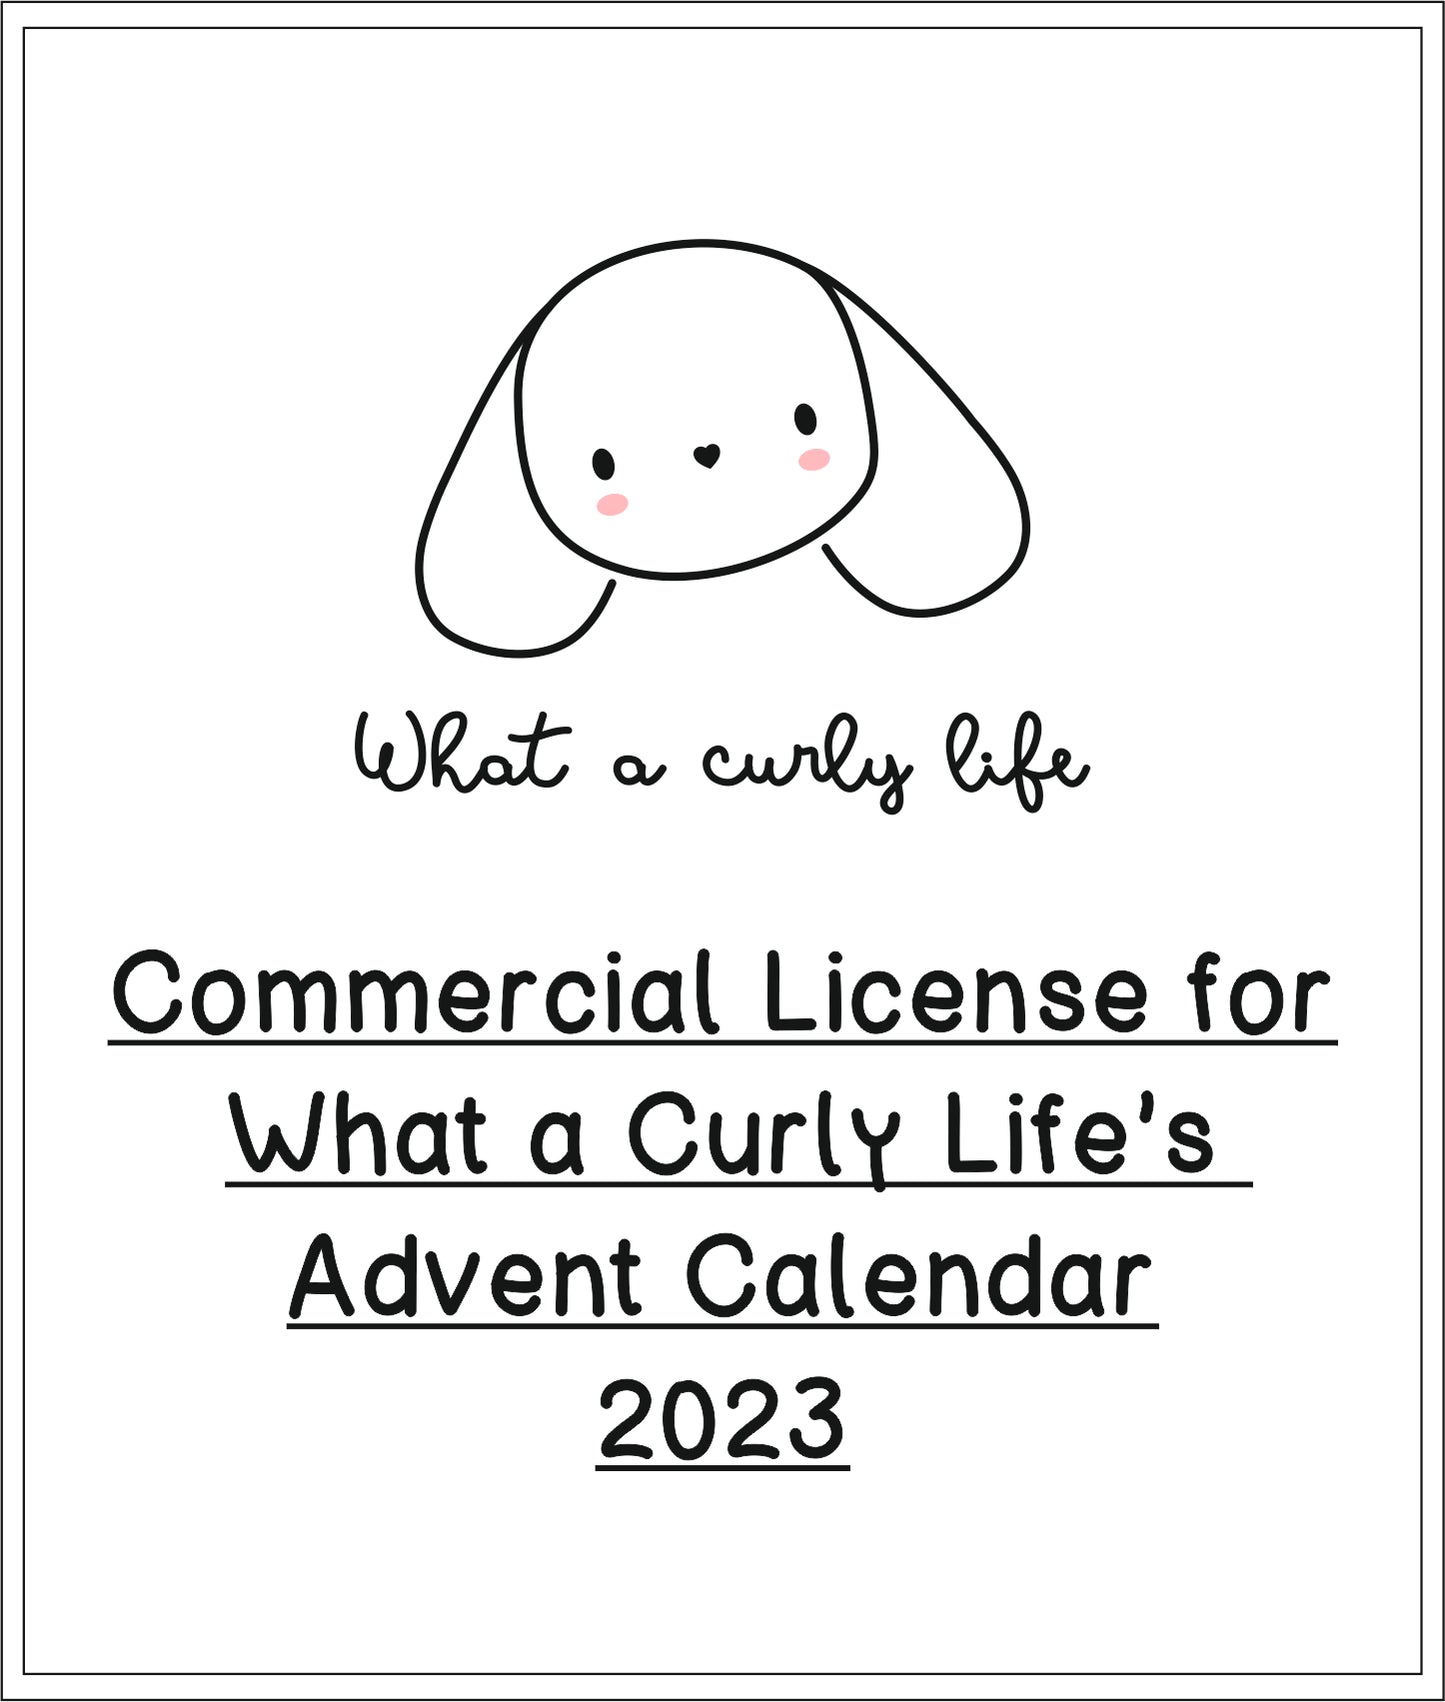 Commercial License for Advent Calendar 2023